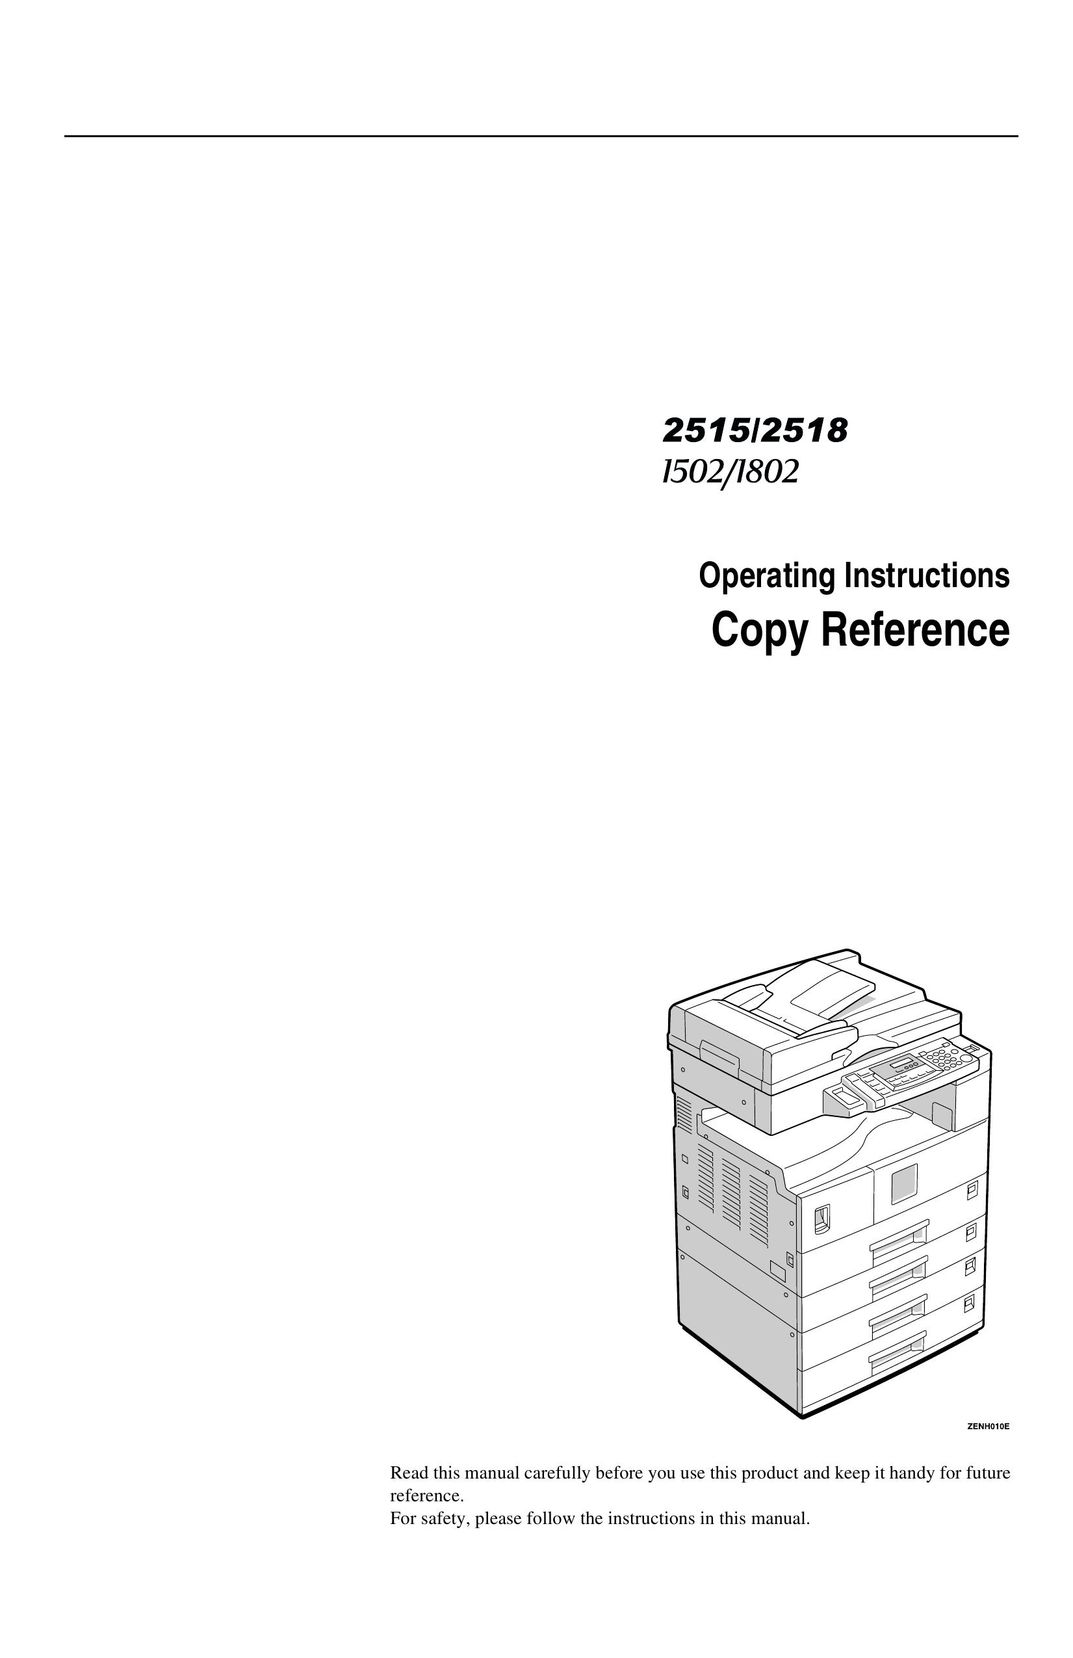 Savin 2515 Printer User Manual